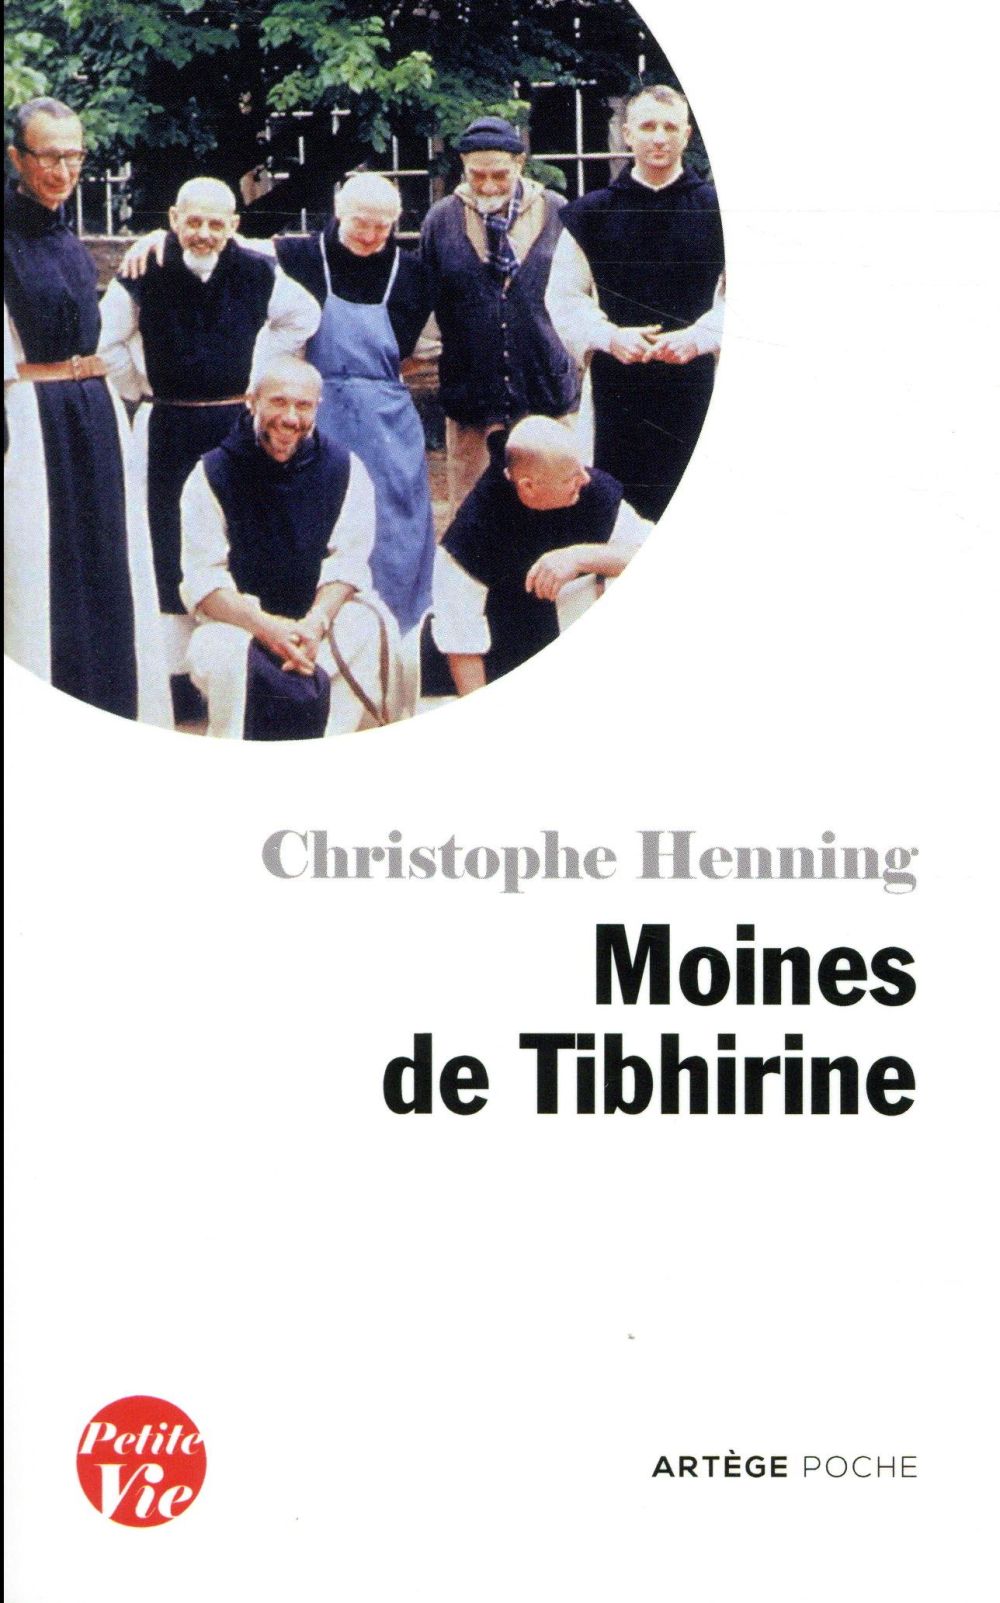 PETITE VIE DES MOINES DE TIBHIRINE